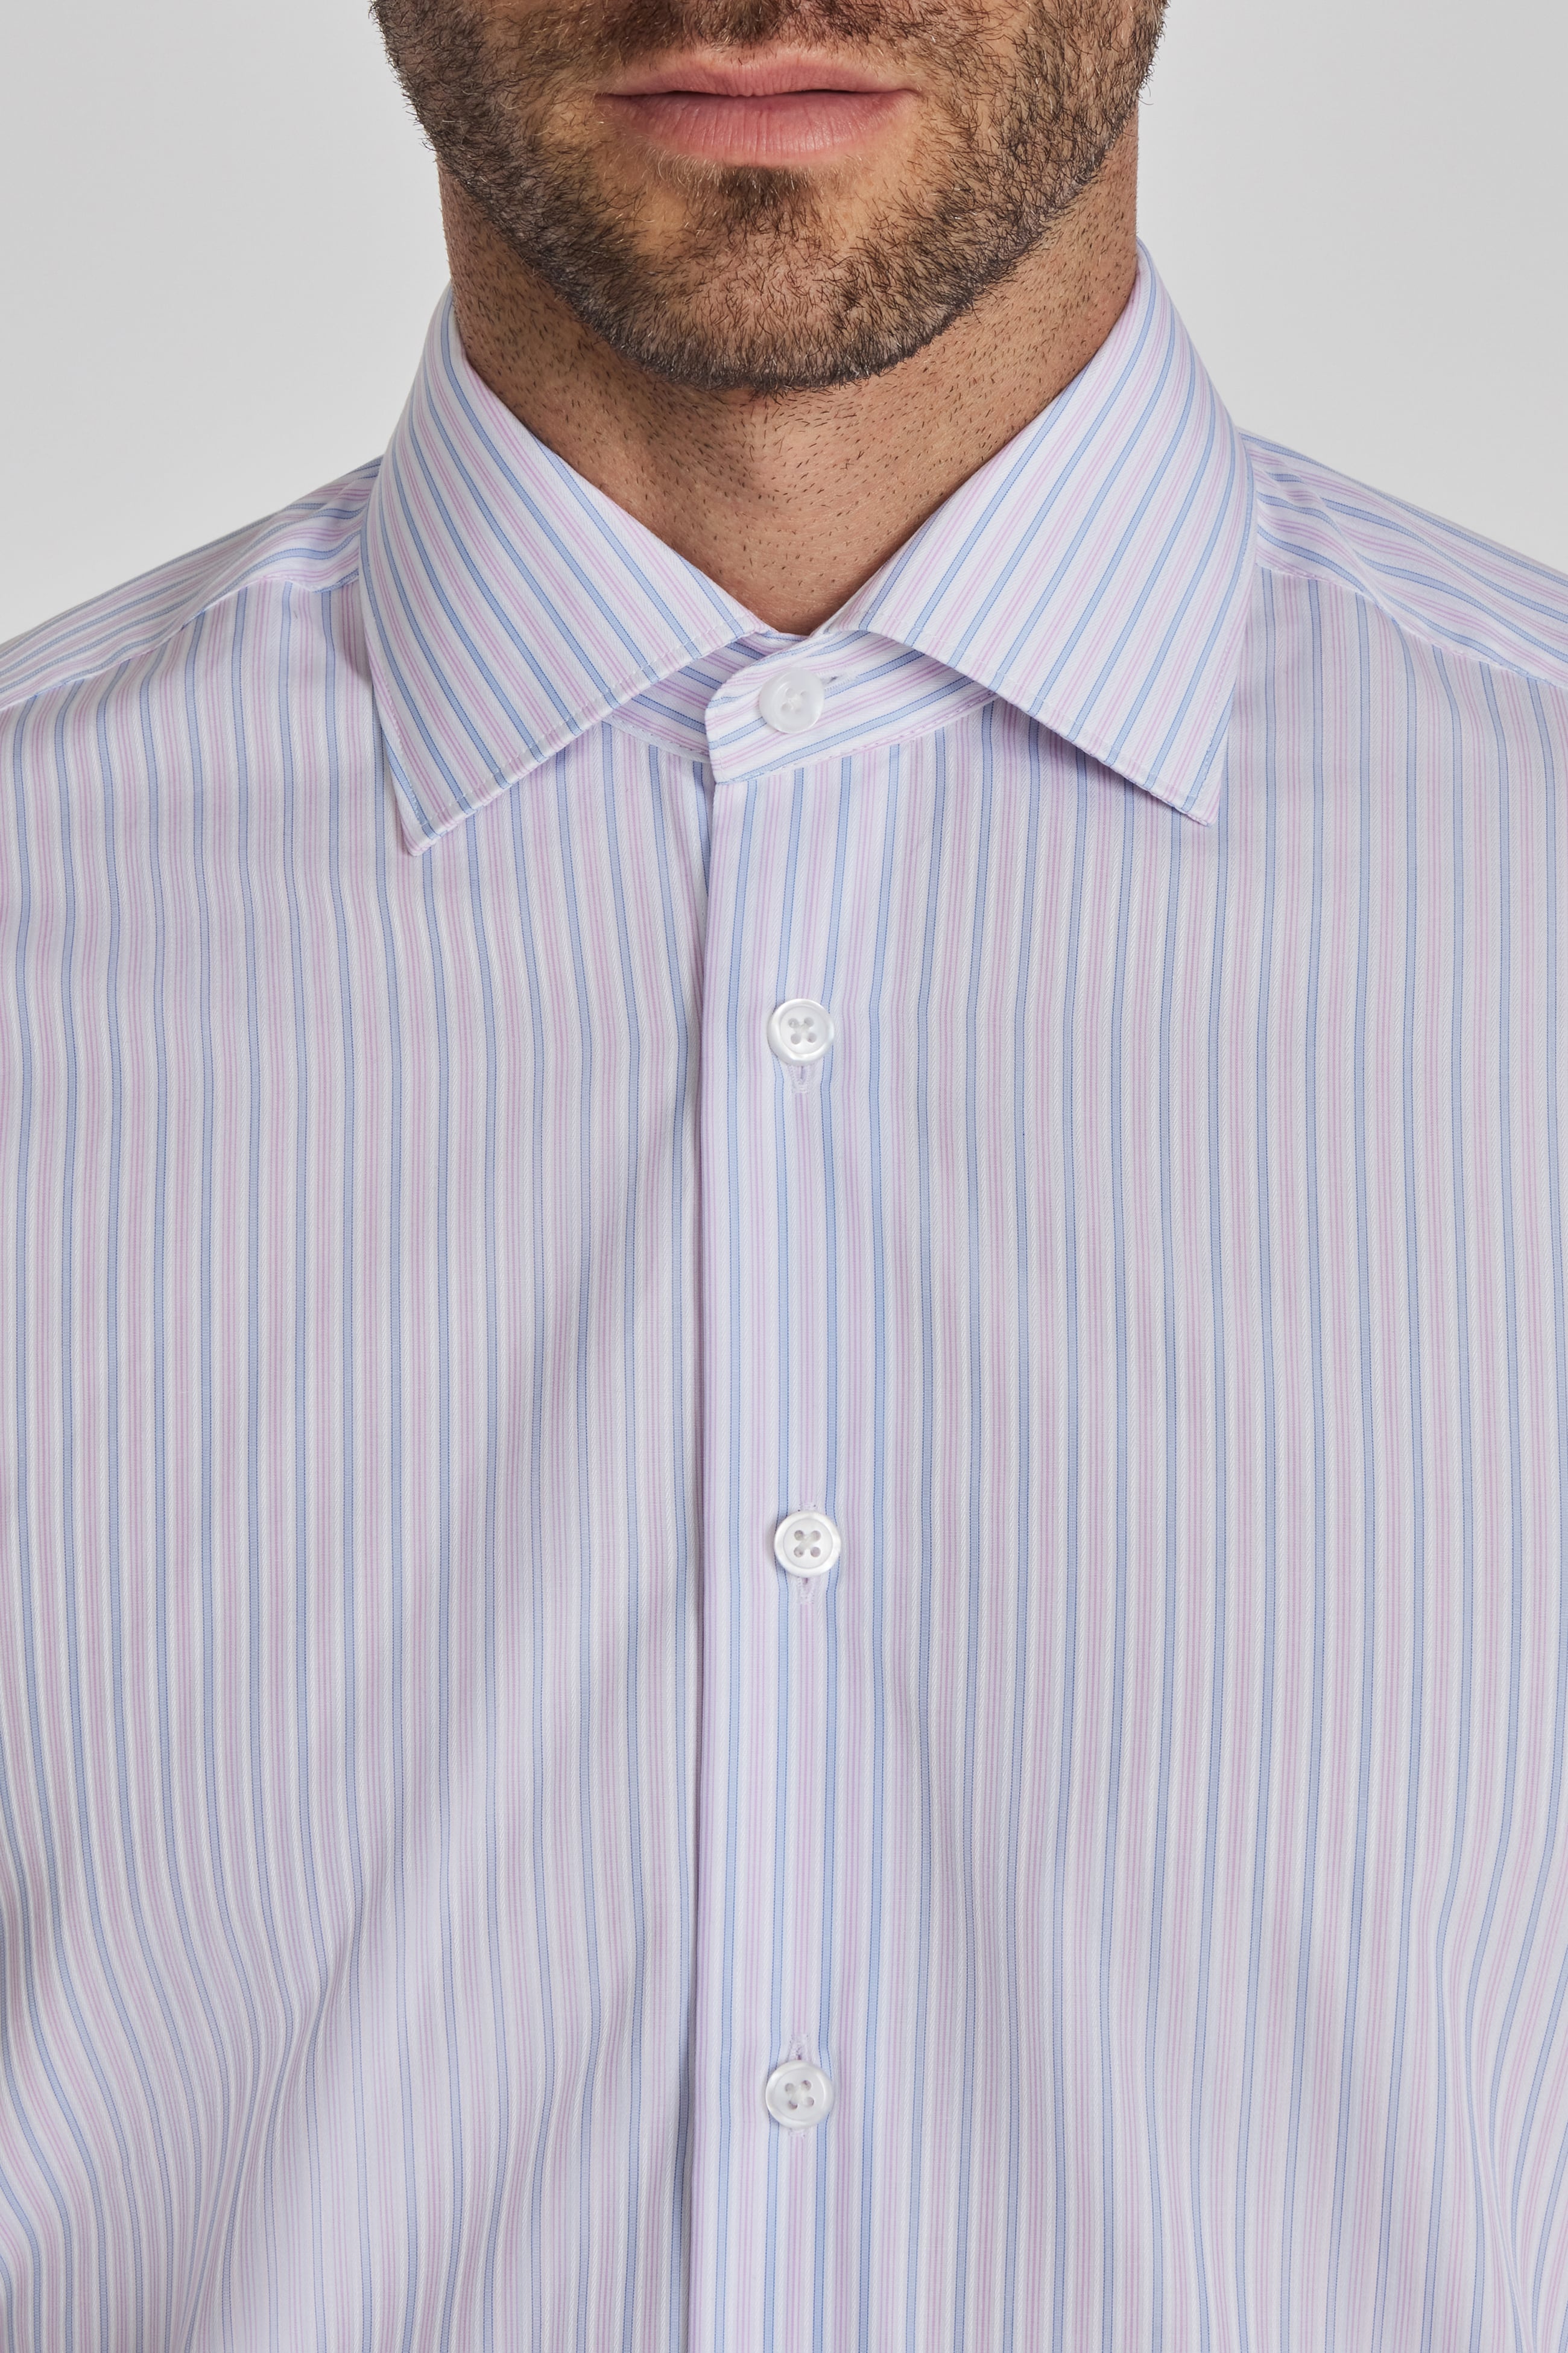 Saville Pink Stripe Cotton Dress Shirt